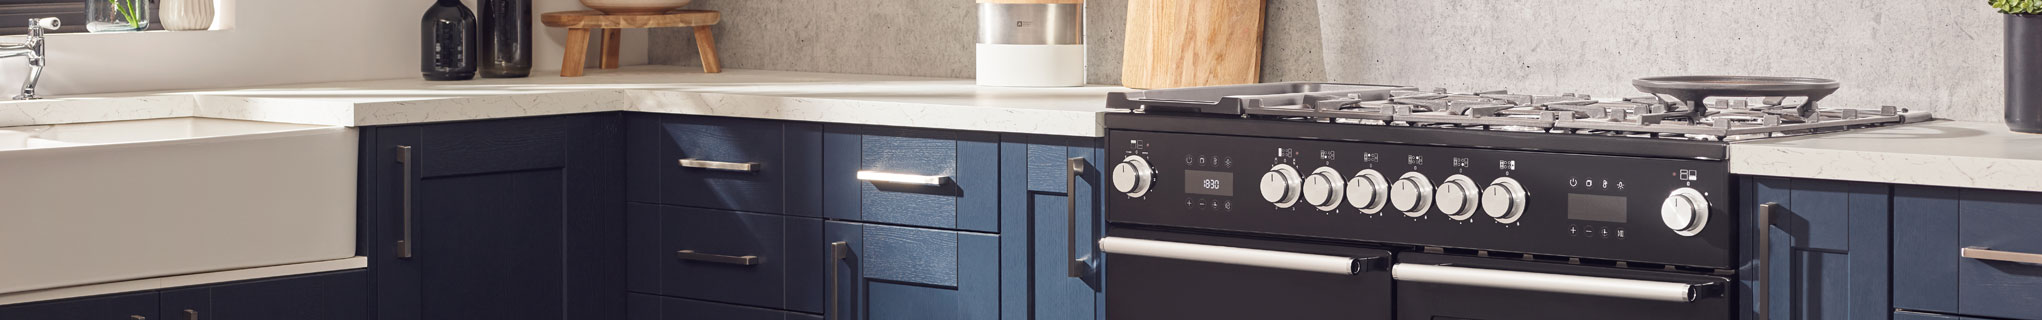 Falcon Nexus Steam Dual Fuel in Black in Blue kitchen